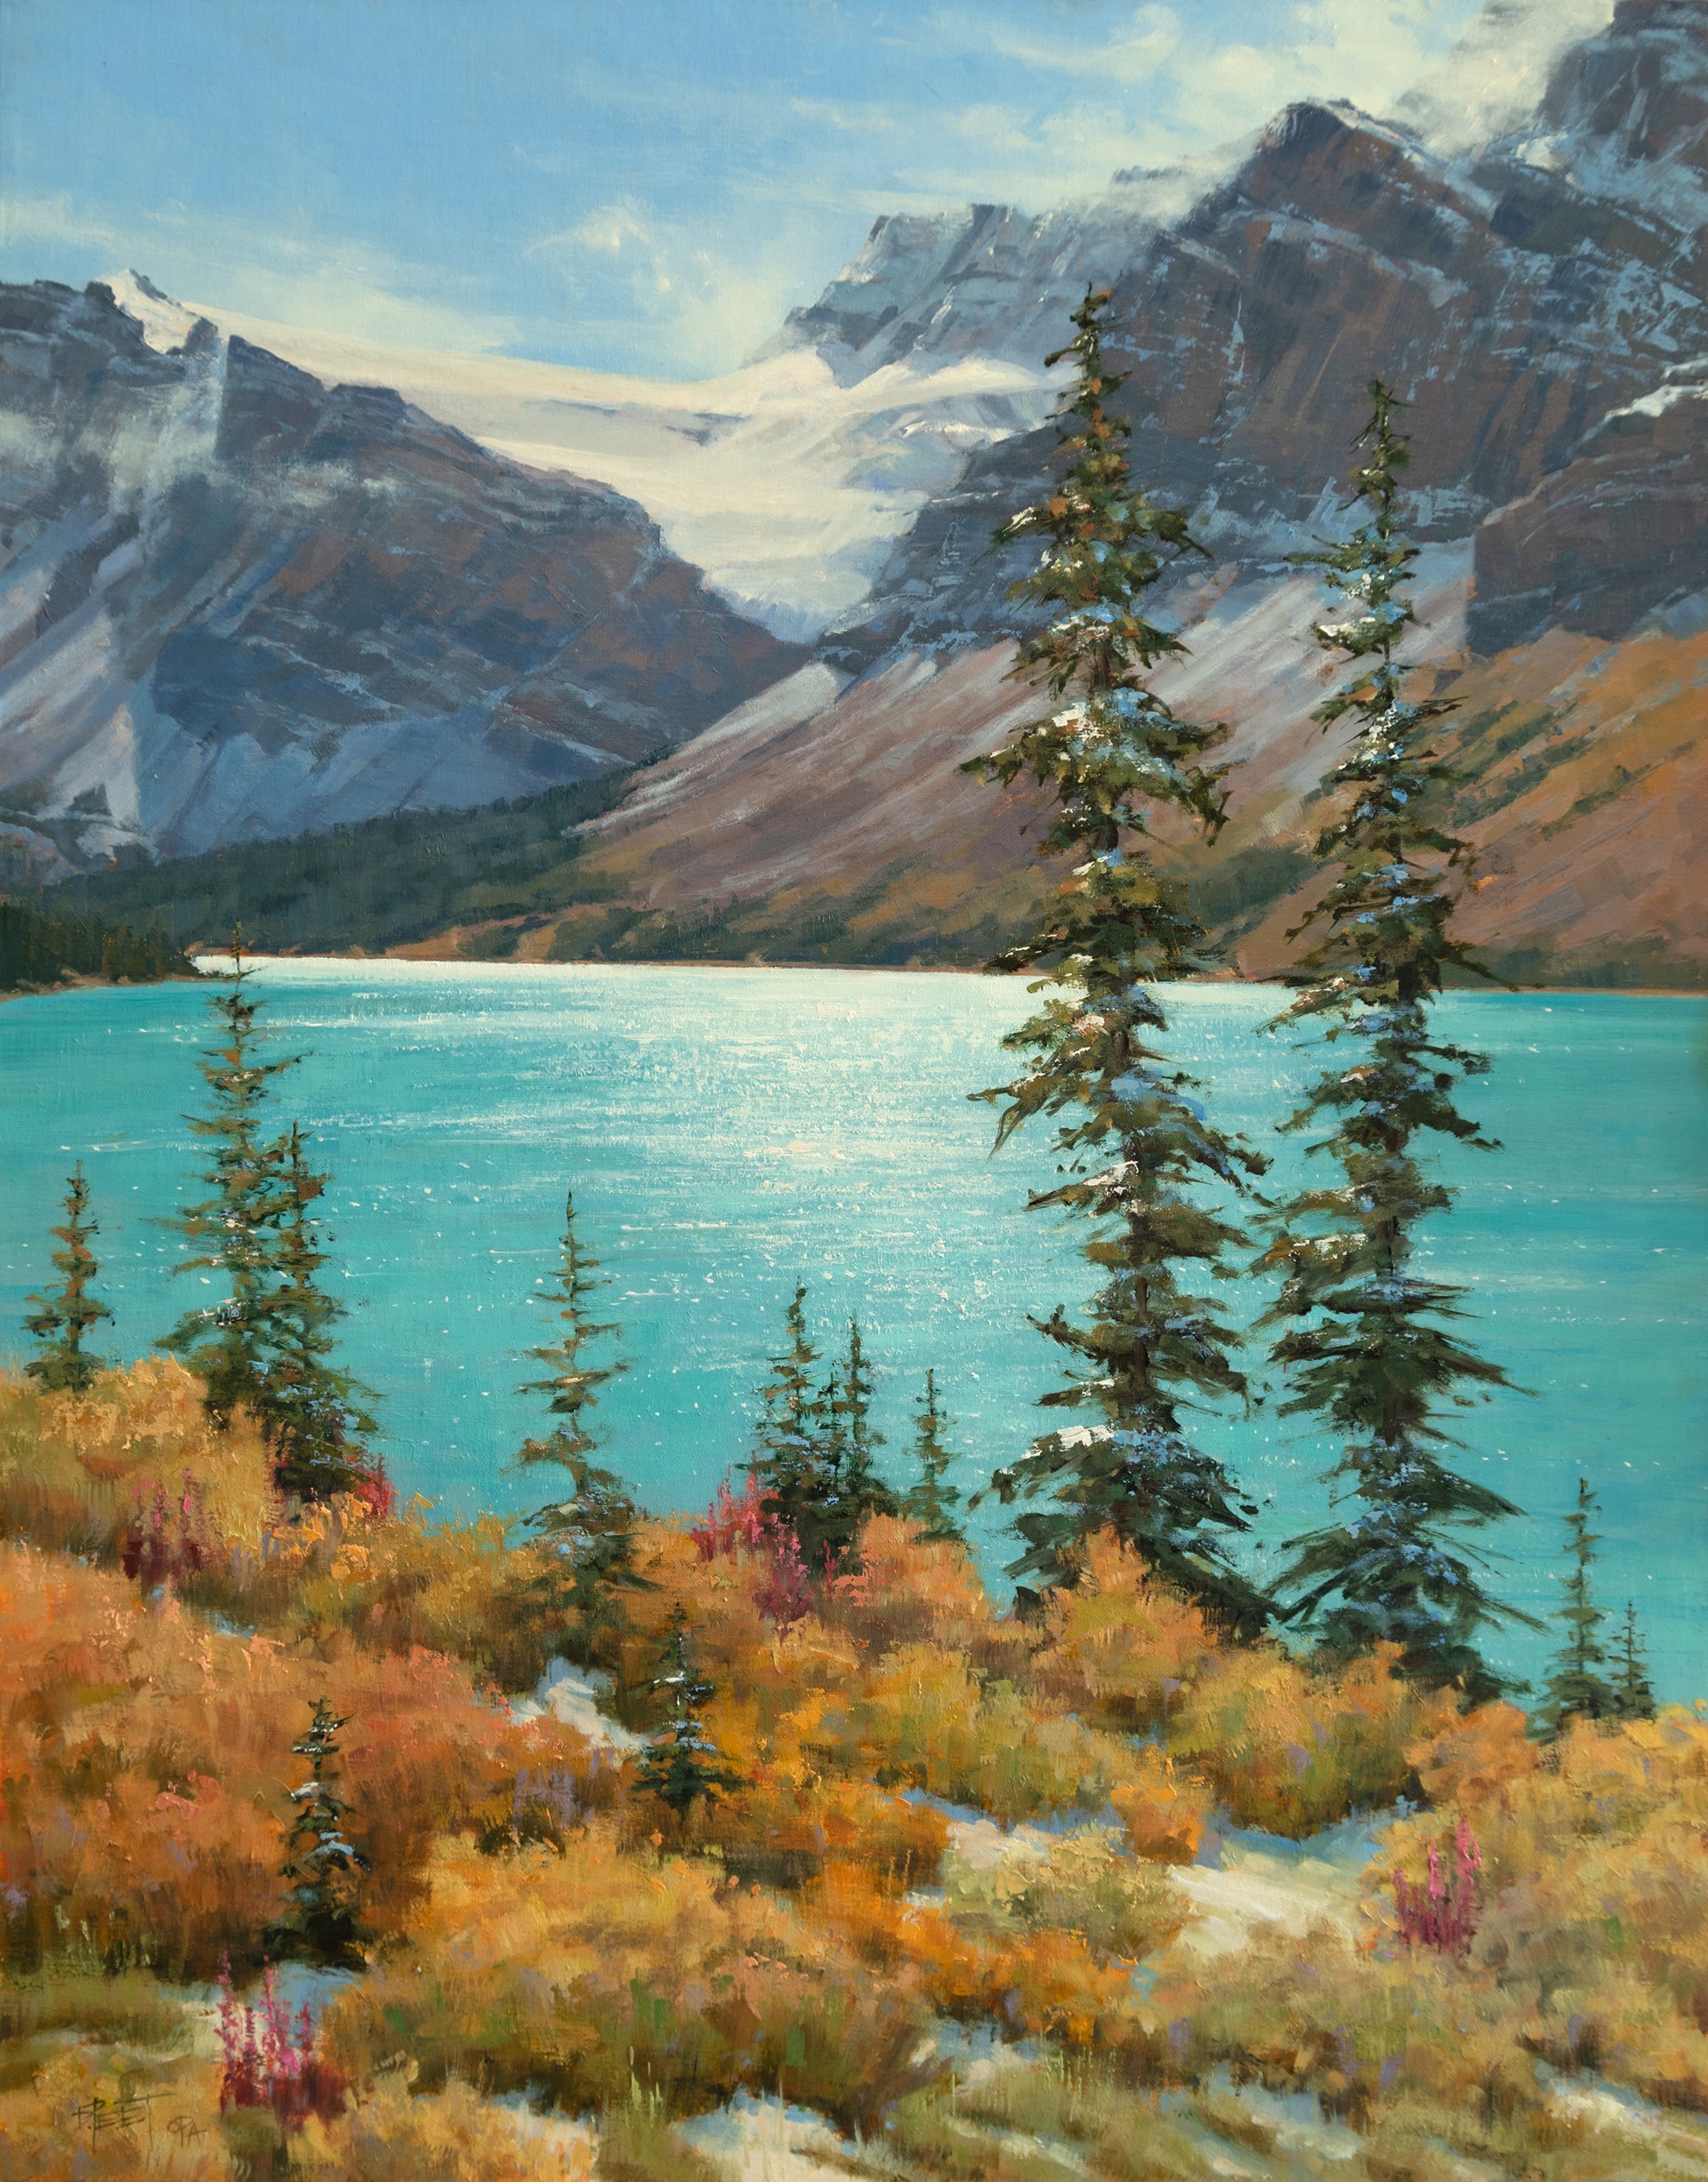 Glacier and Aqua Glisten (Canadian Rockies) by Darcie Peet